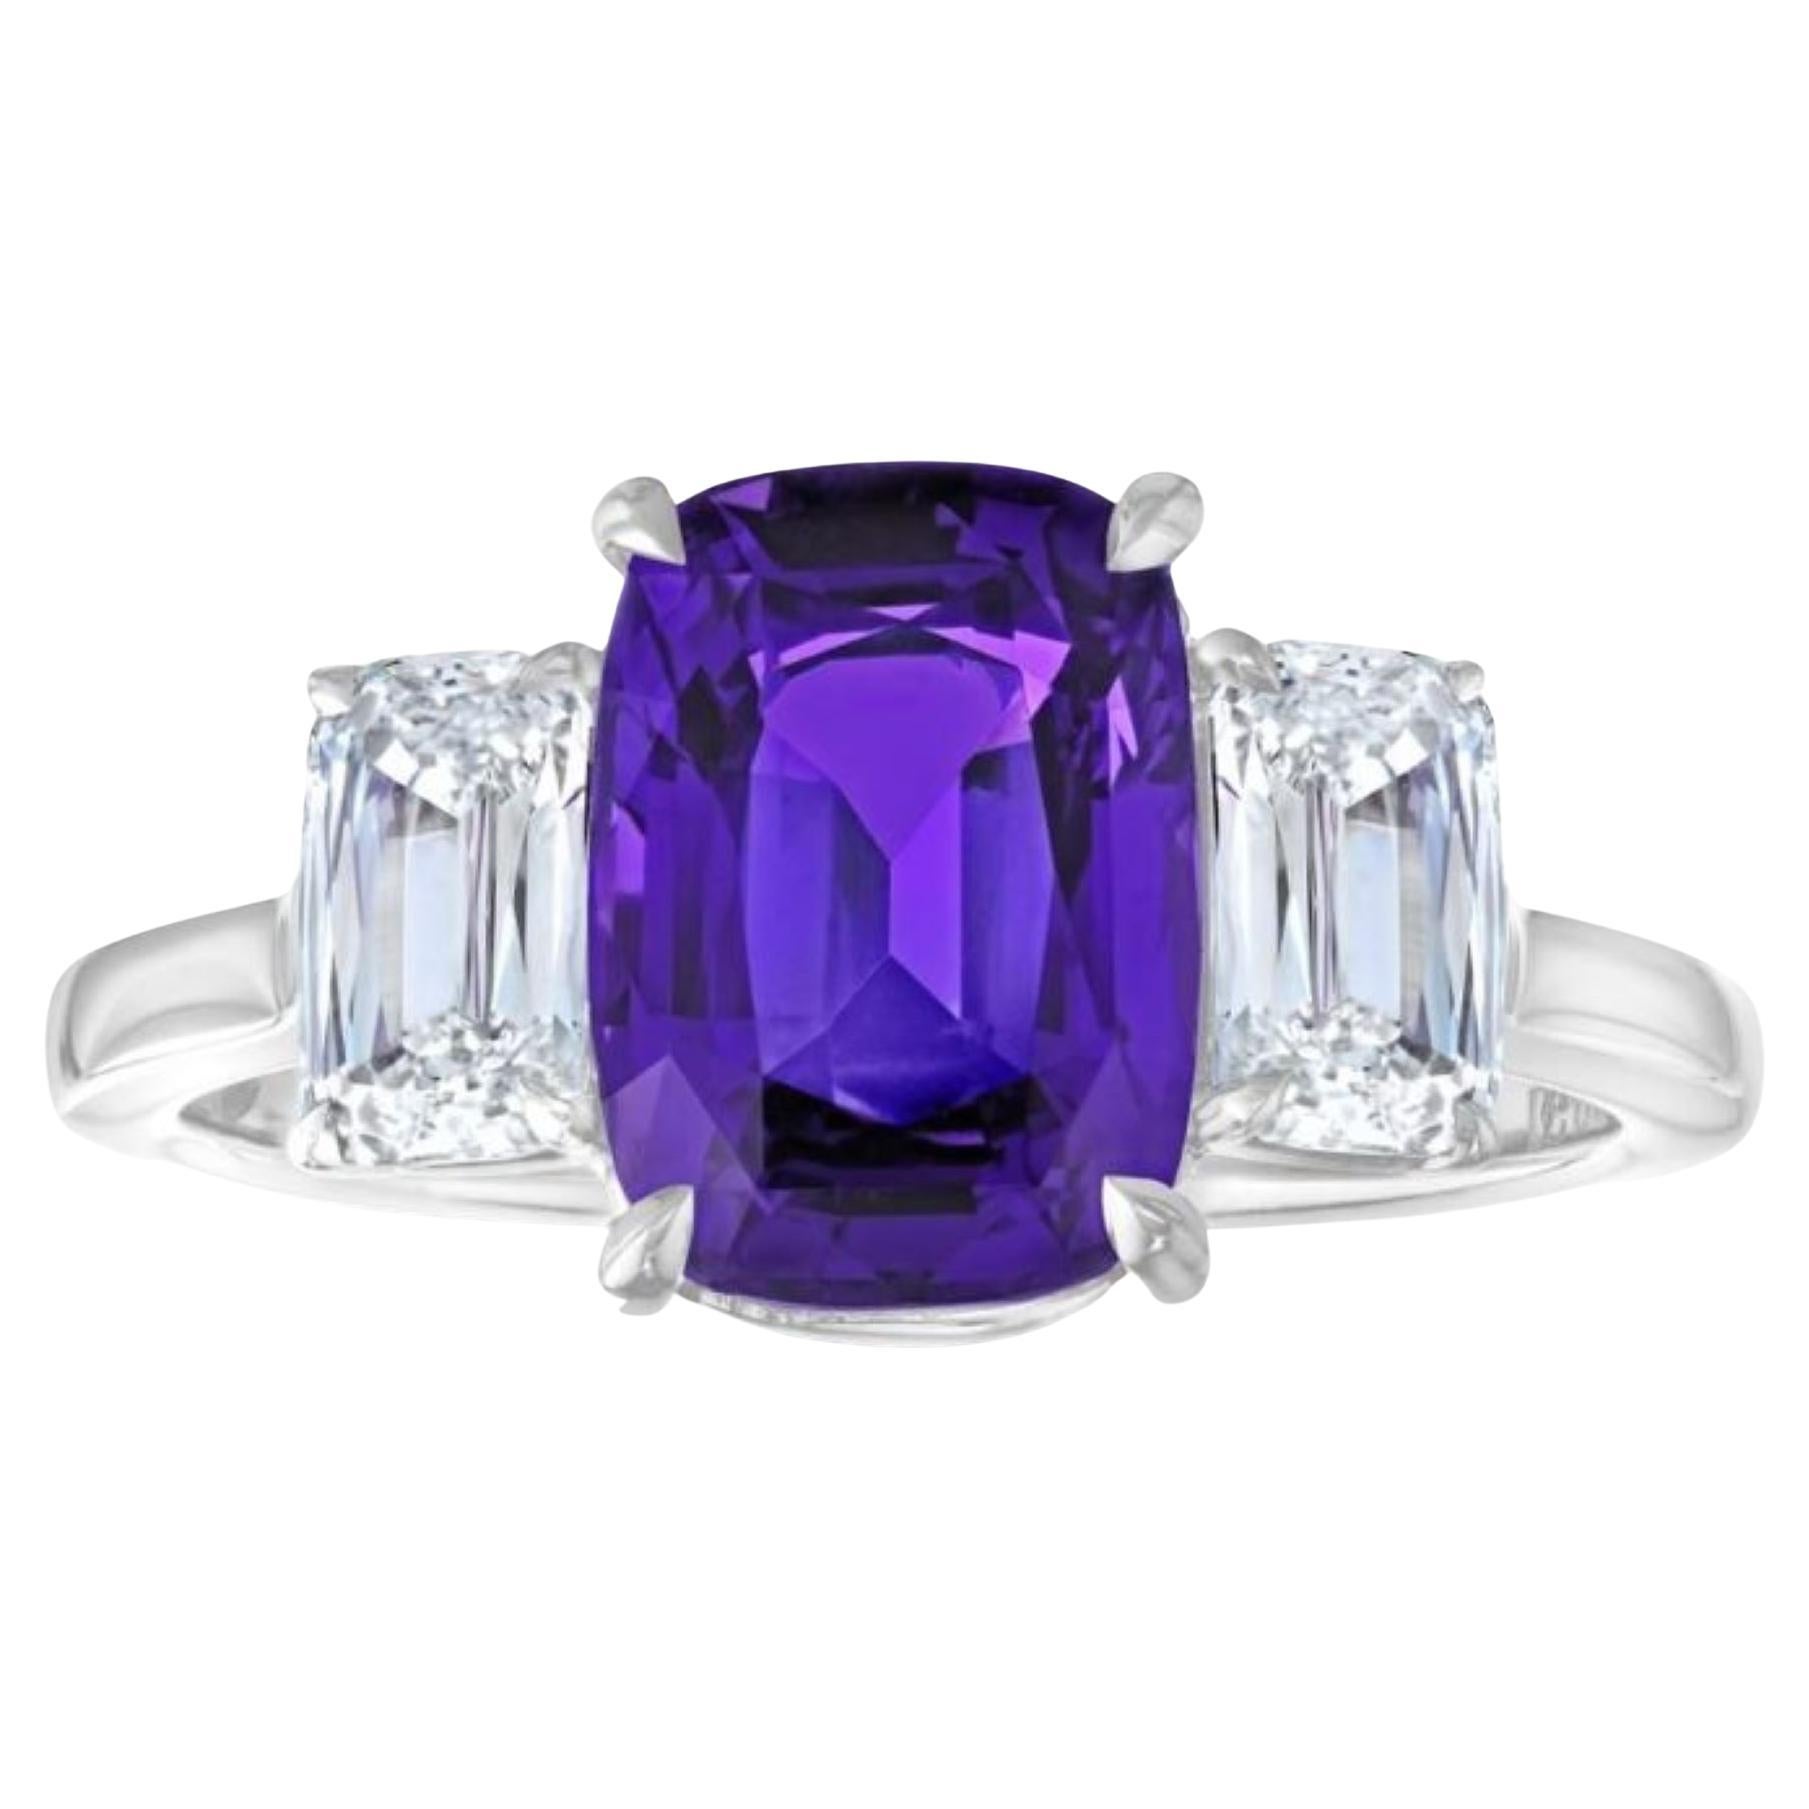 3.72 Carat Cushion Purple Sapphire and Diamond Platinum Ring